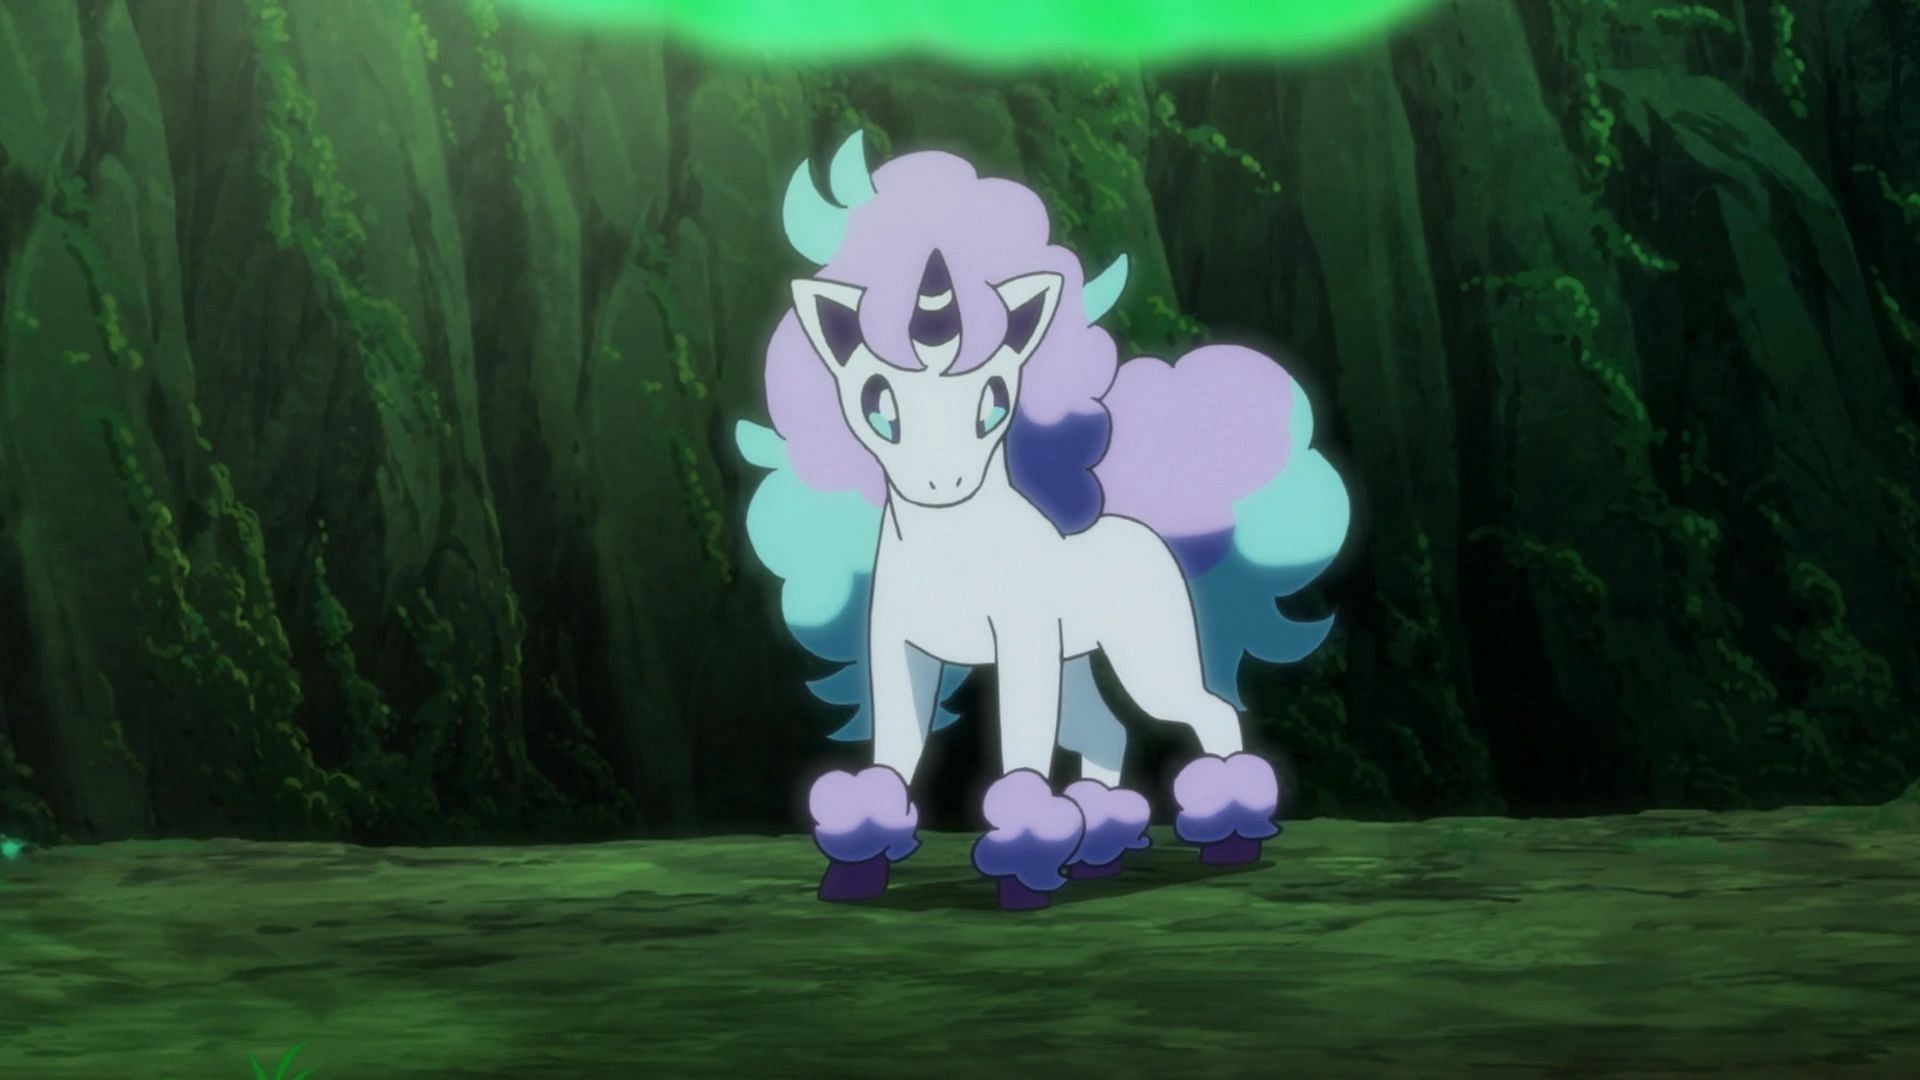 Galarian Ponyta as it appears in the anime (Image via Pokemon Fandom Wiki)